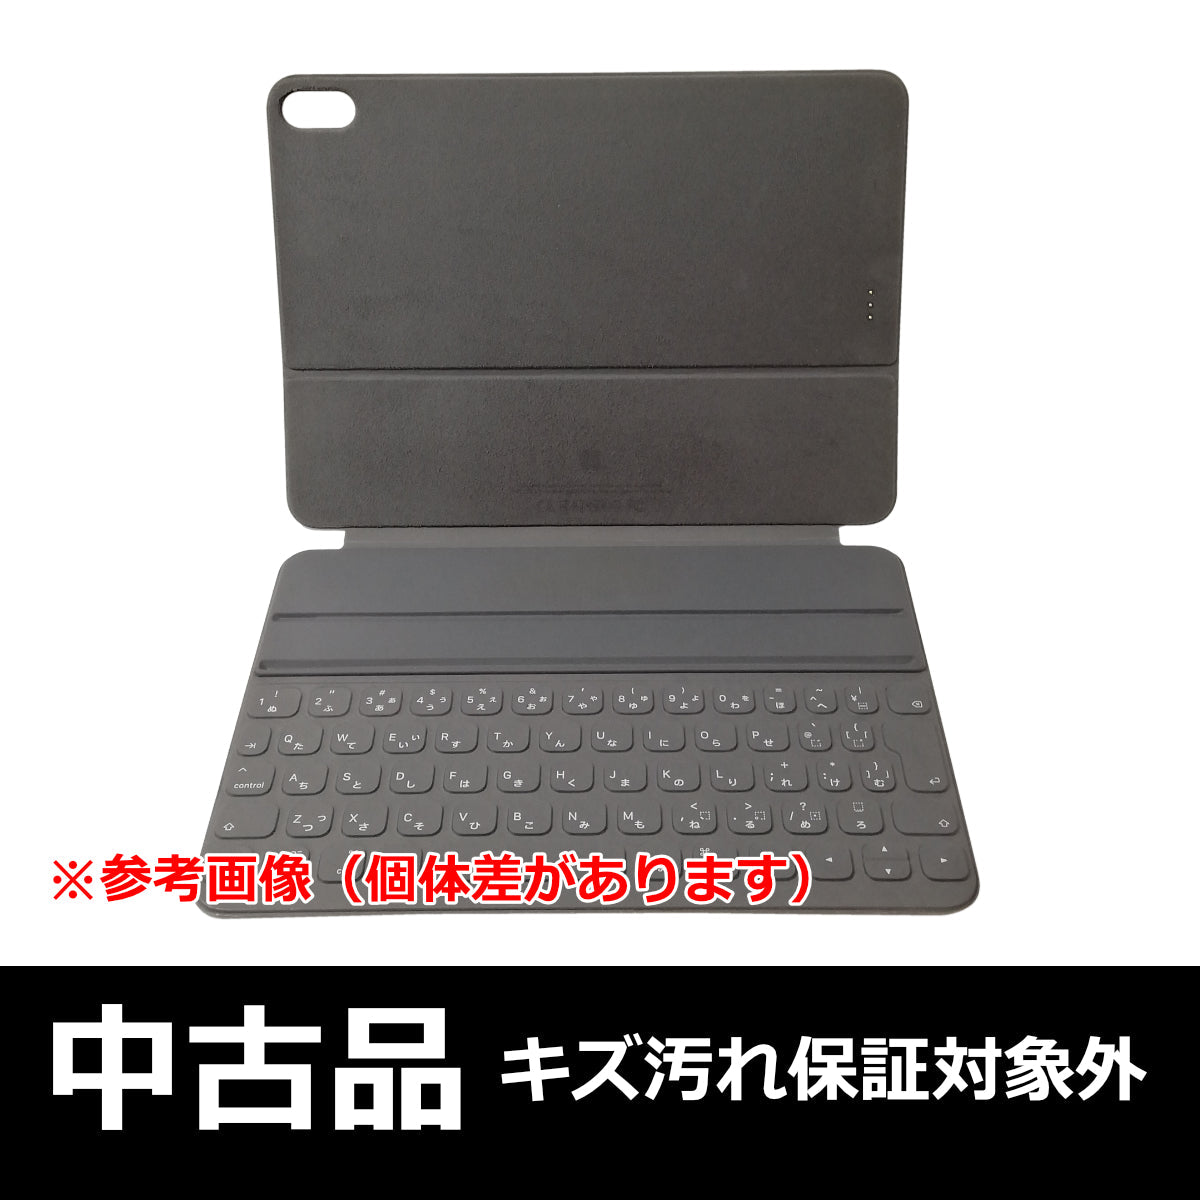 中古品】 iPadPro(11-inch) Smart Keyboard Folio MU8G2J/A [管理番号 ...